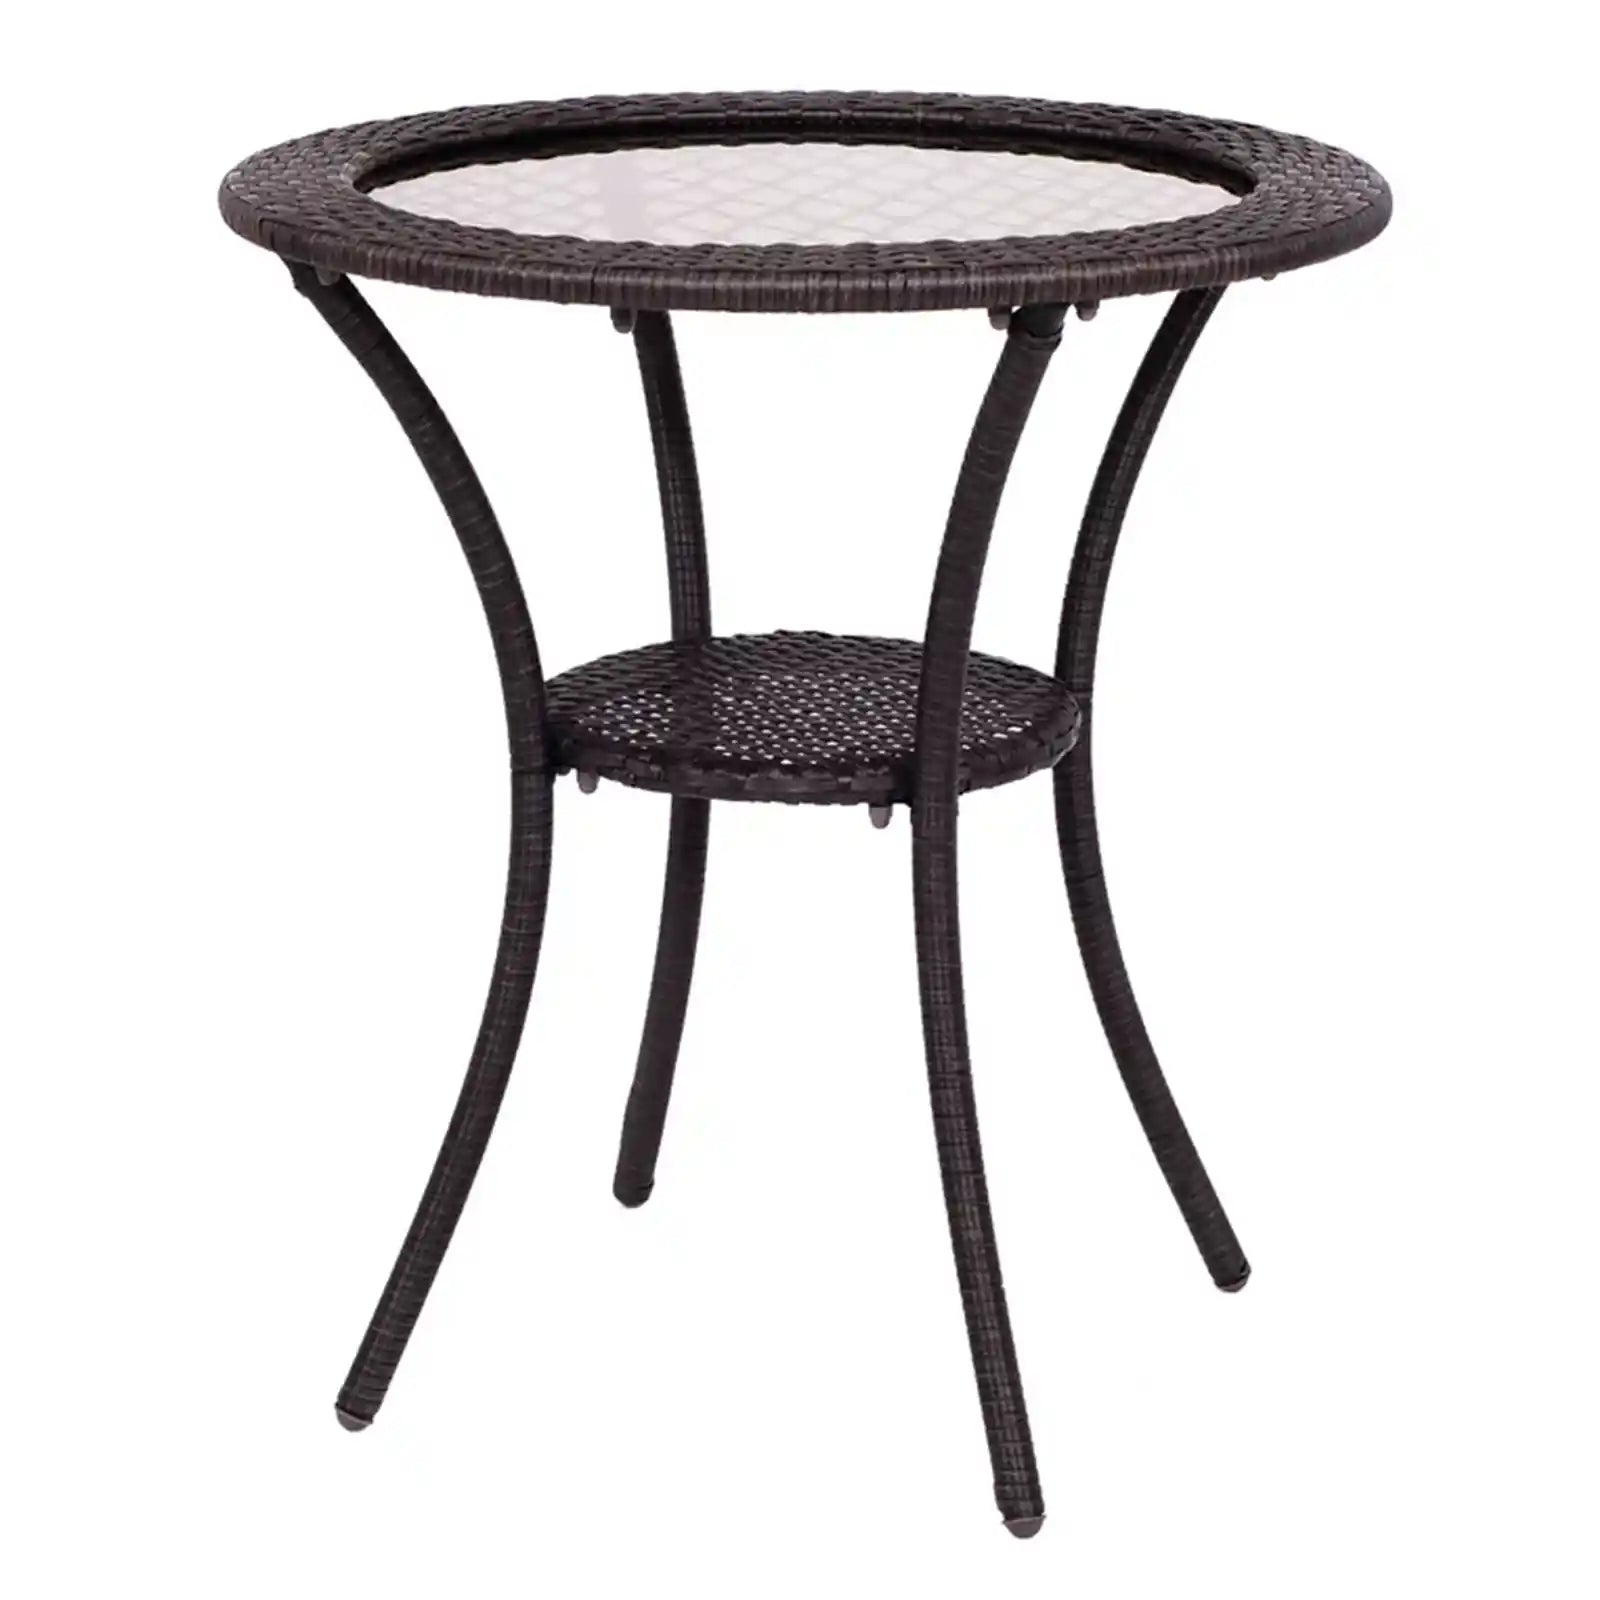 Round Rattan Wicker Coffee Table Glass Top Steel Frame Patio Furniture